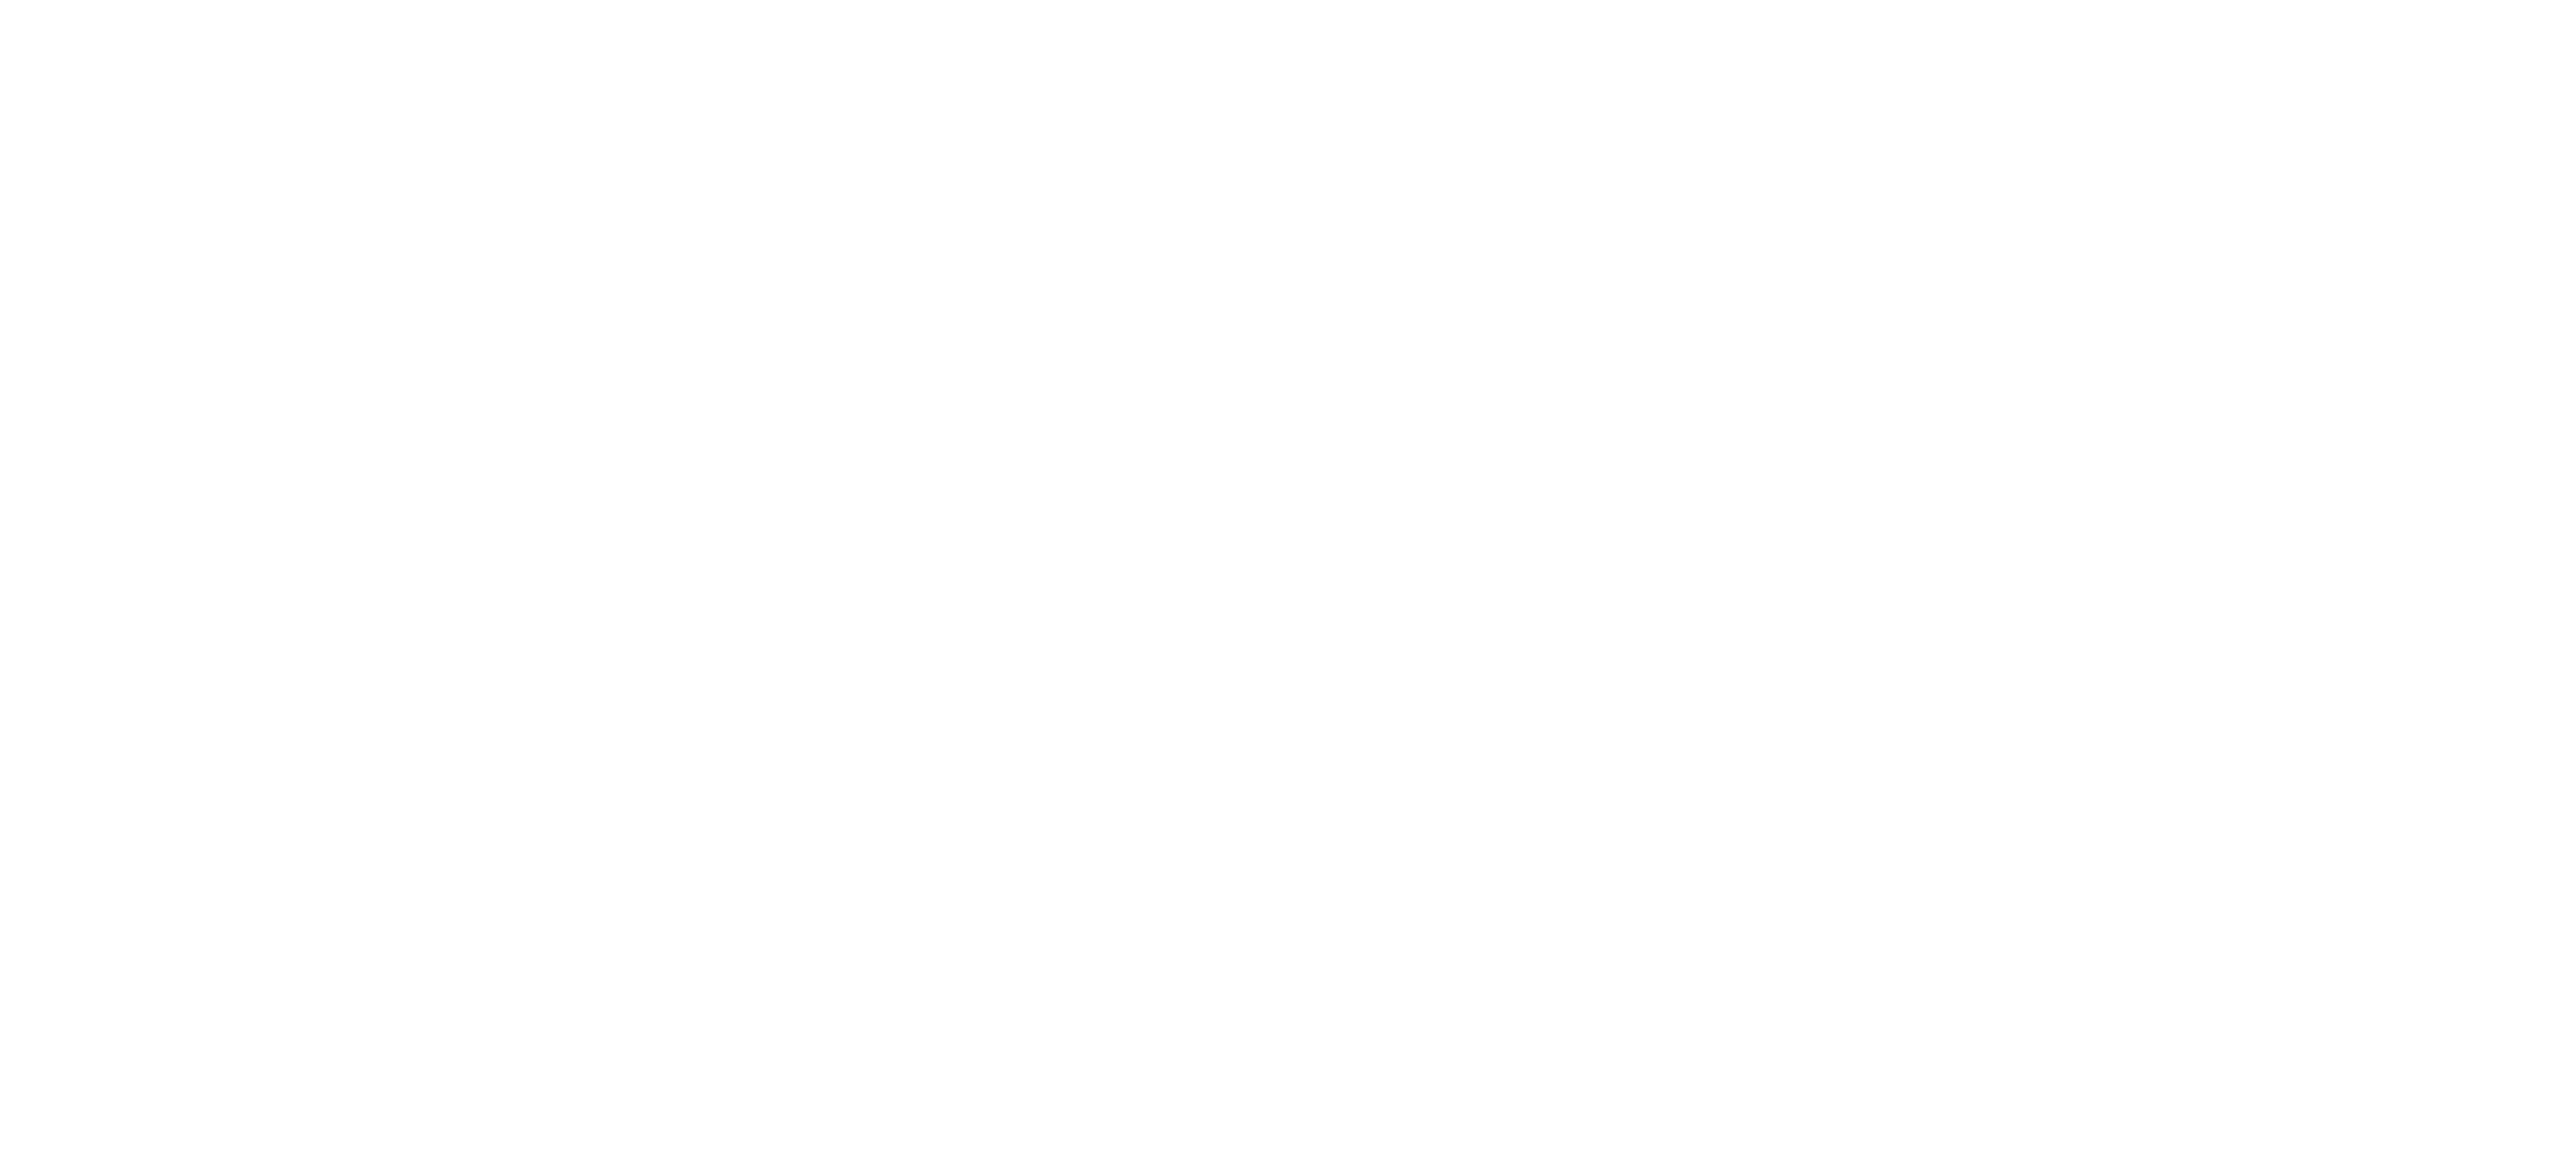 ROSbot 2R dimensions